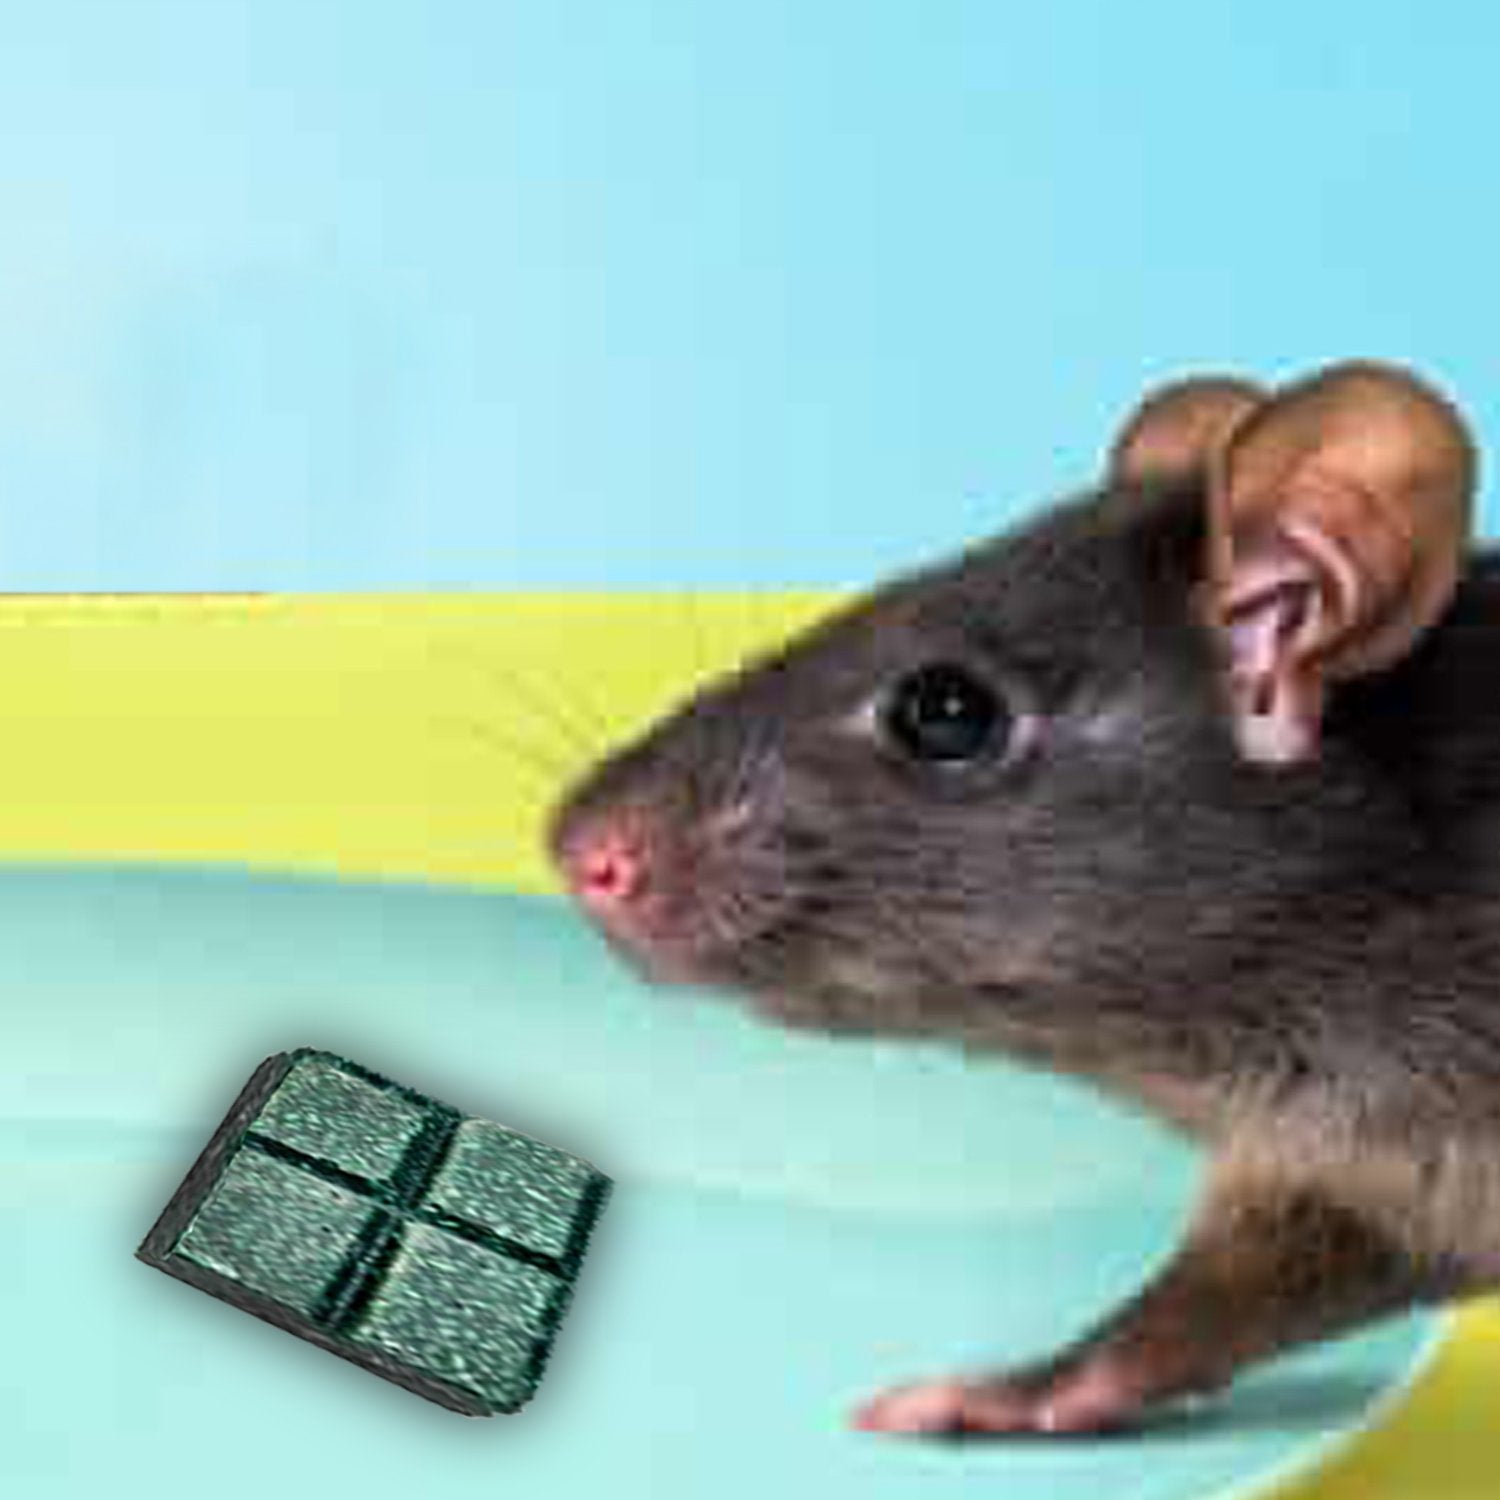 297 100gm PCI Roban the Rat Killer (Brown) BIG